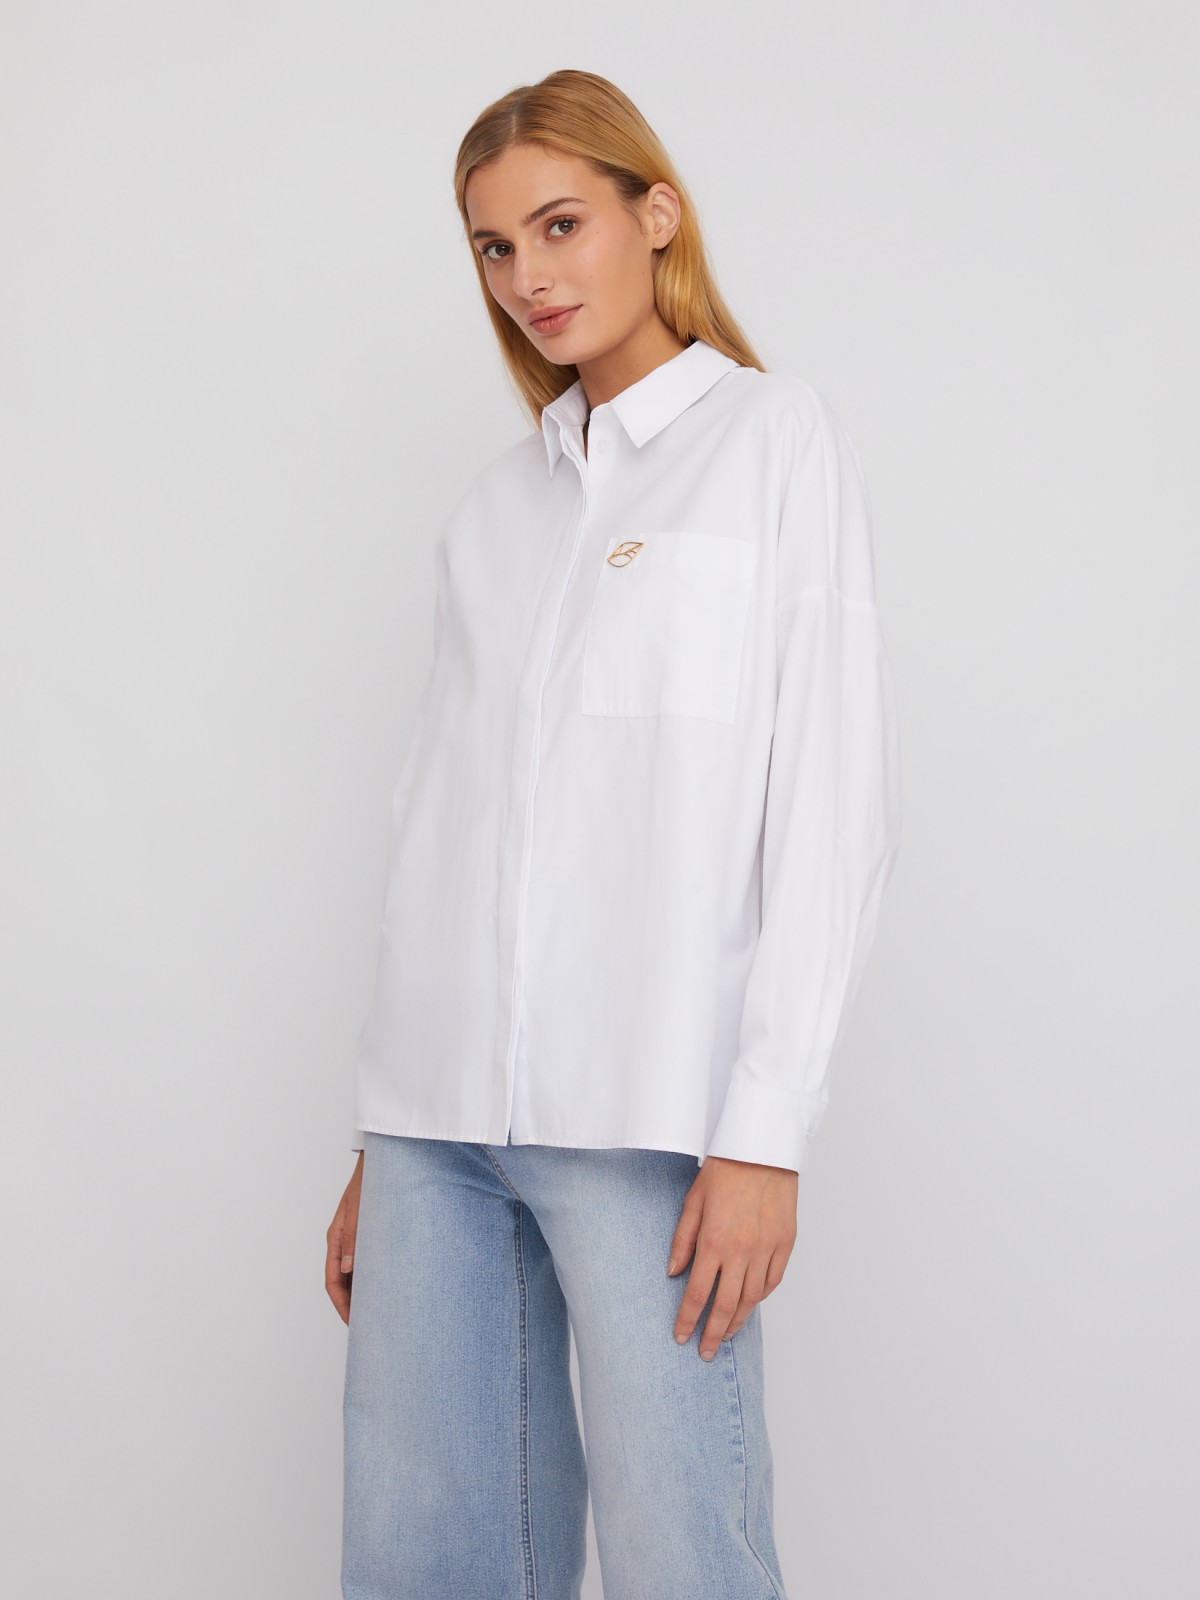 Рубашка оверсайз силуэта с металлическим значком-нашивкой zolla 02411117Y052, цвет белый, размер XXS - фото 1